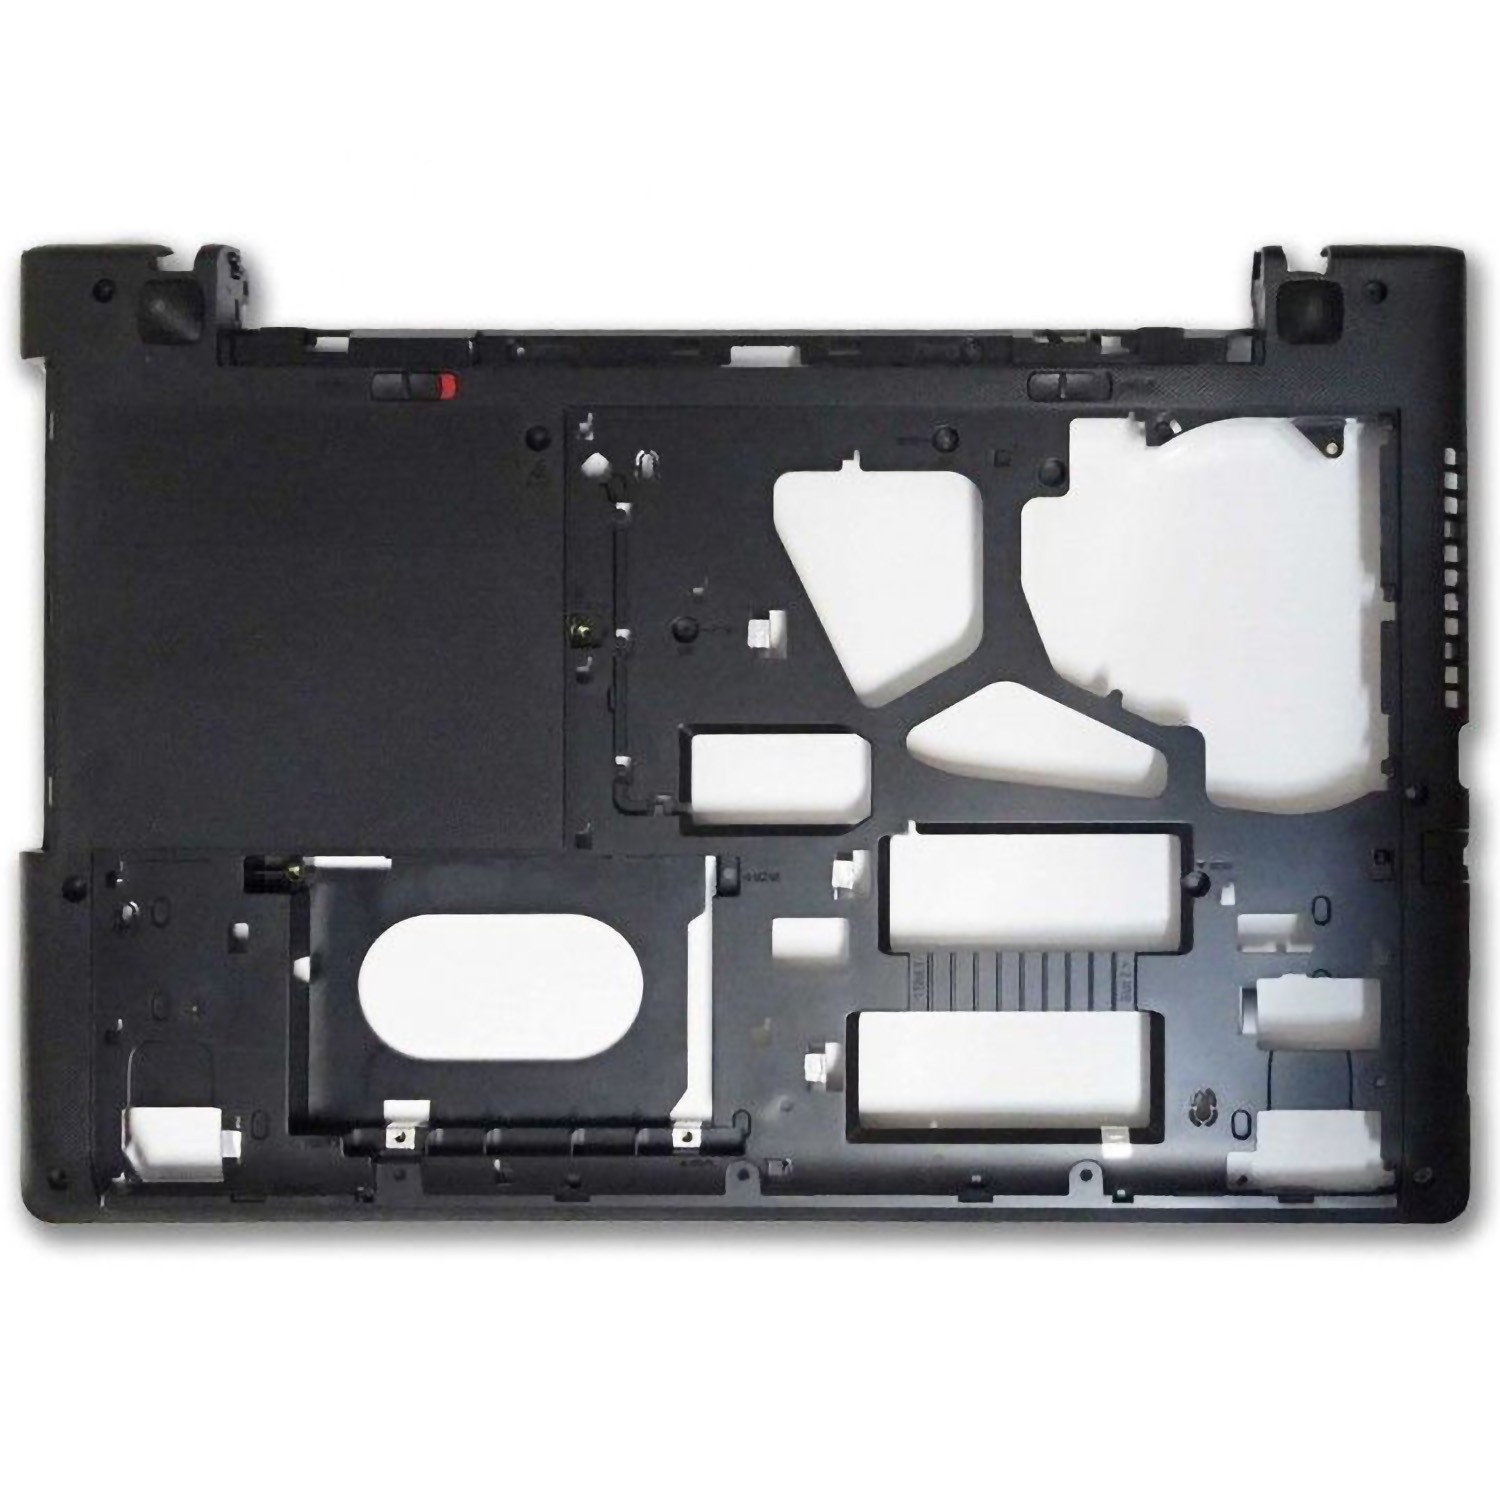 Carcasa para portatil Lenovo G570 envio 24H 🔝🔝🔝